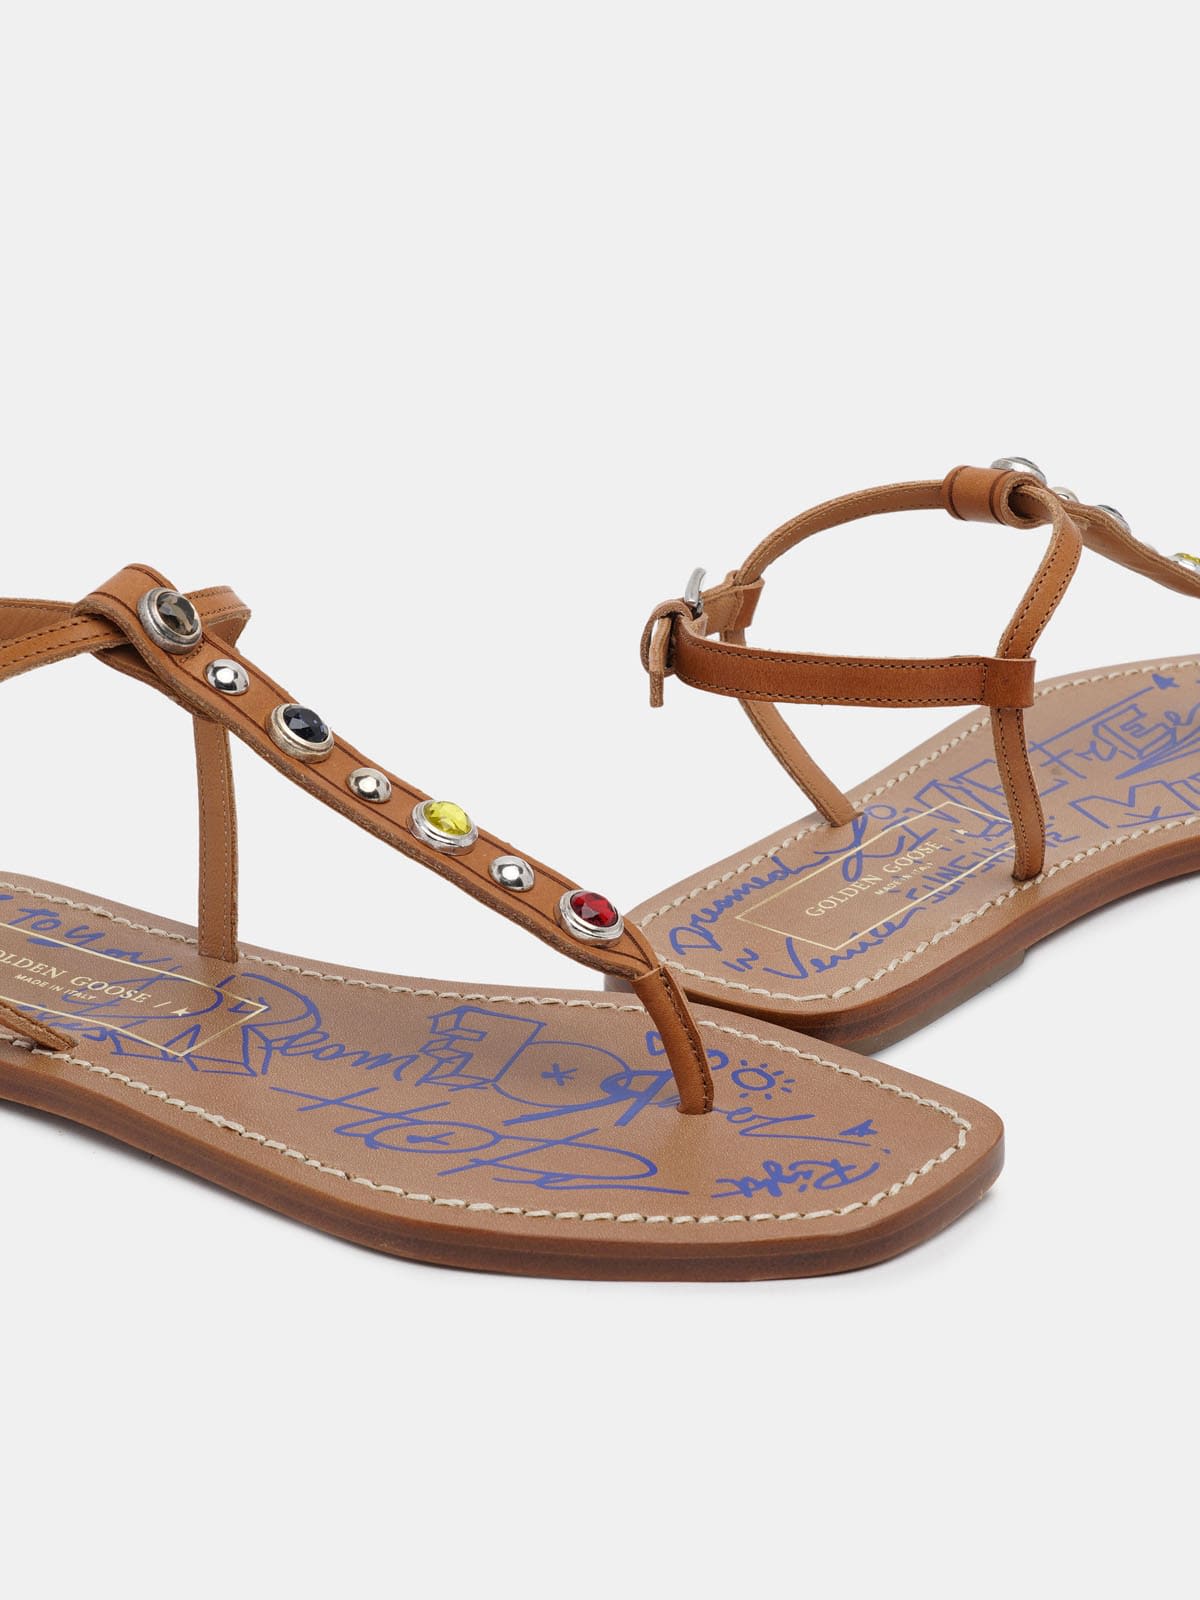 Dakota thong sandals with decorative gems